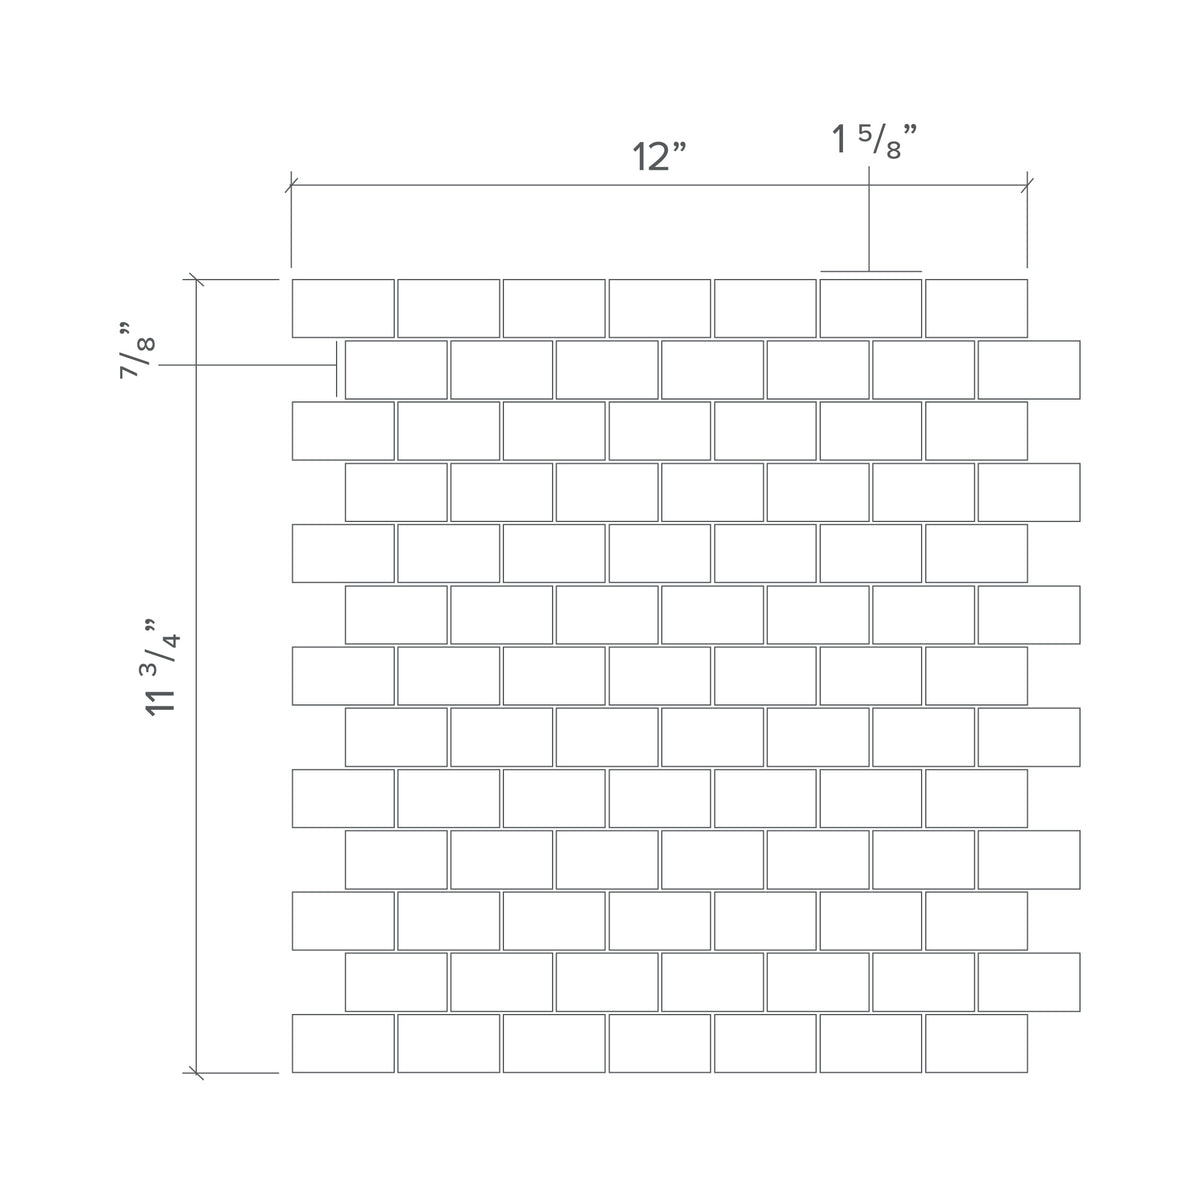 Mini Brick Bond Mosaic Main Product Slider View